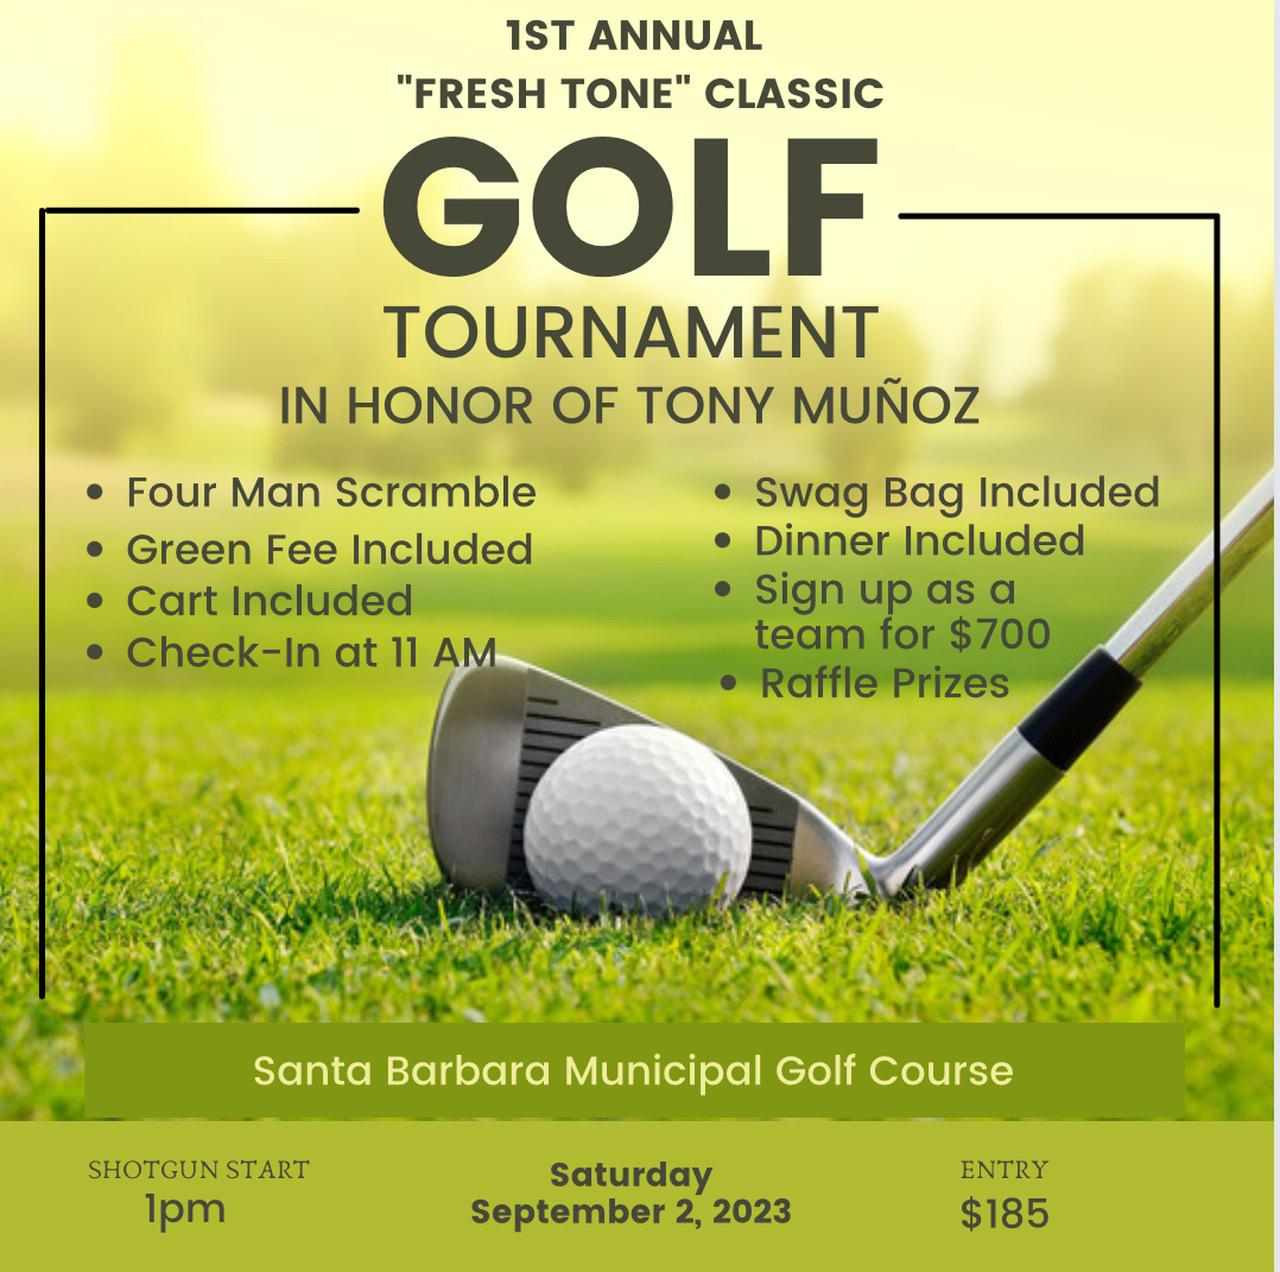 1st Annual “Fresh Tone” Classic Golf Tournament